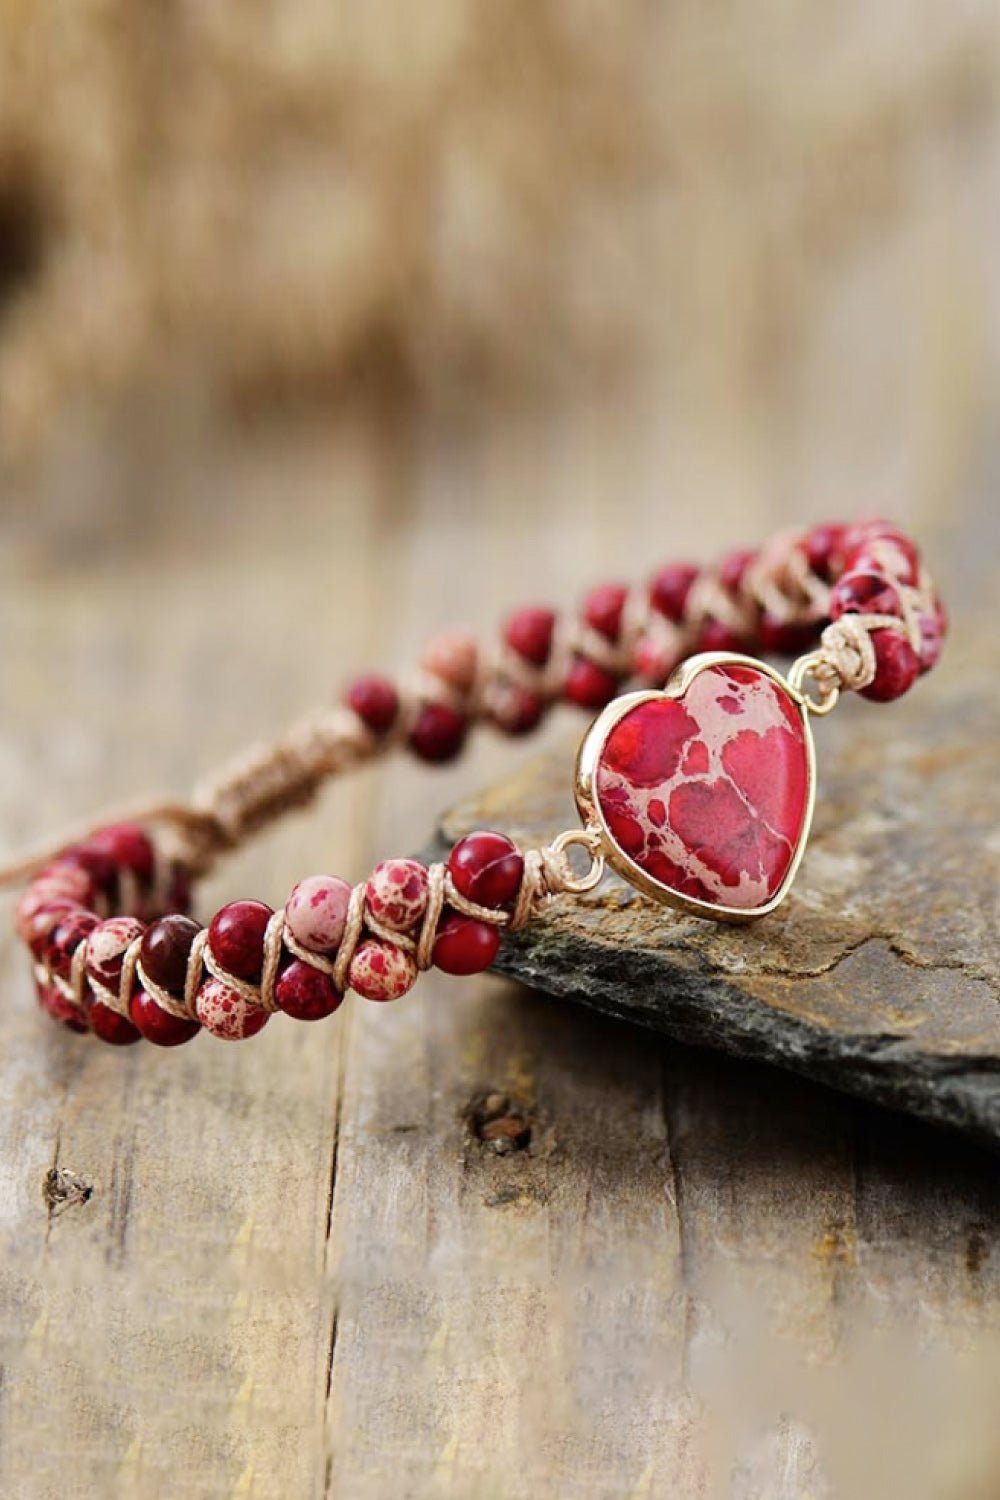 Handmade Heart Shape Natural Stone Bracelet - GemThreads Boutique